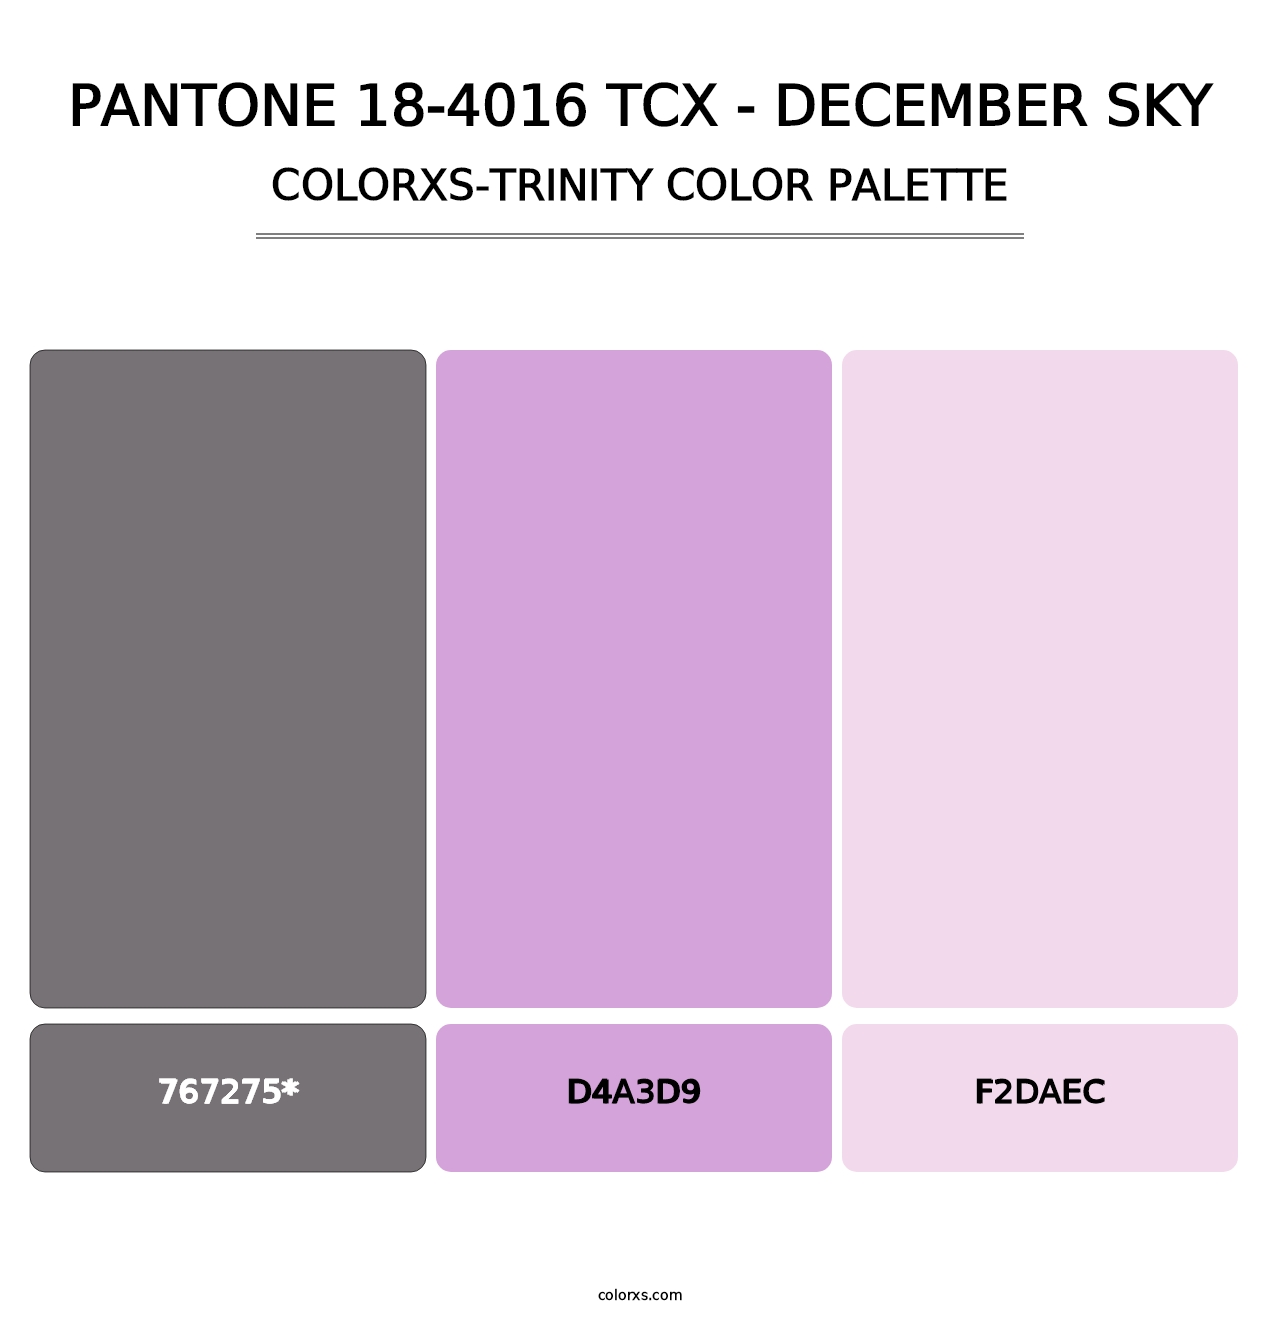 PANTONE 18-4016 TCX - December Sky - Colorxs Trinity Palette